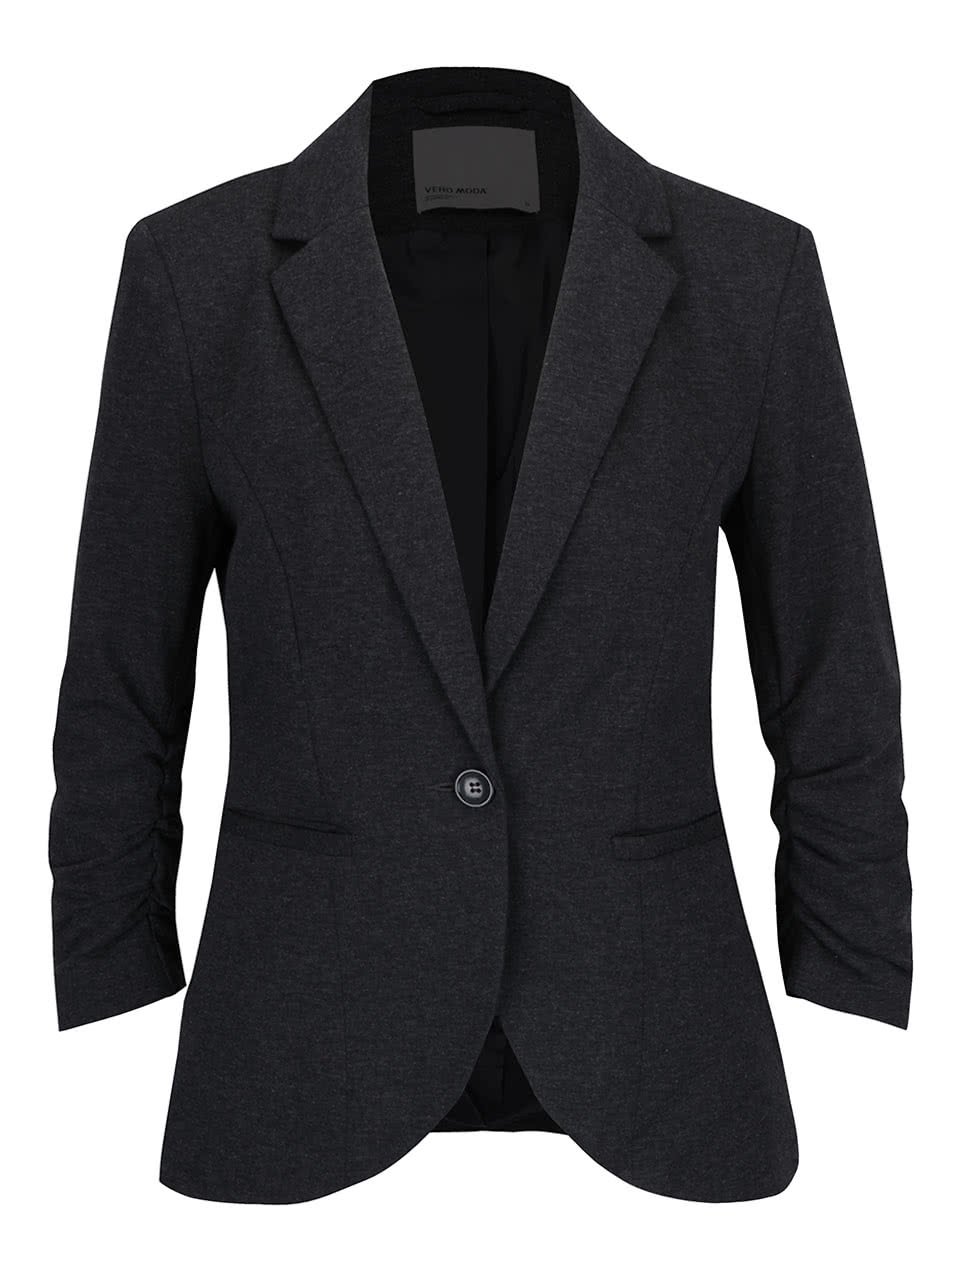 Tmavě šedé sako s nabíranými rukávy Vero Moda Sparkle